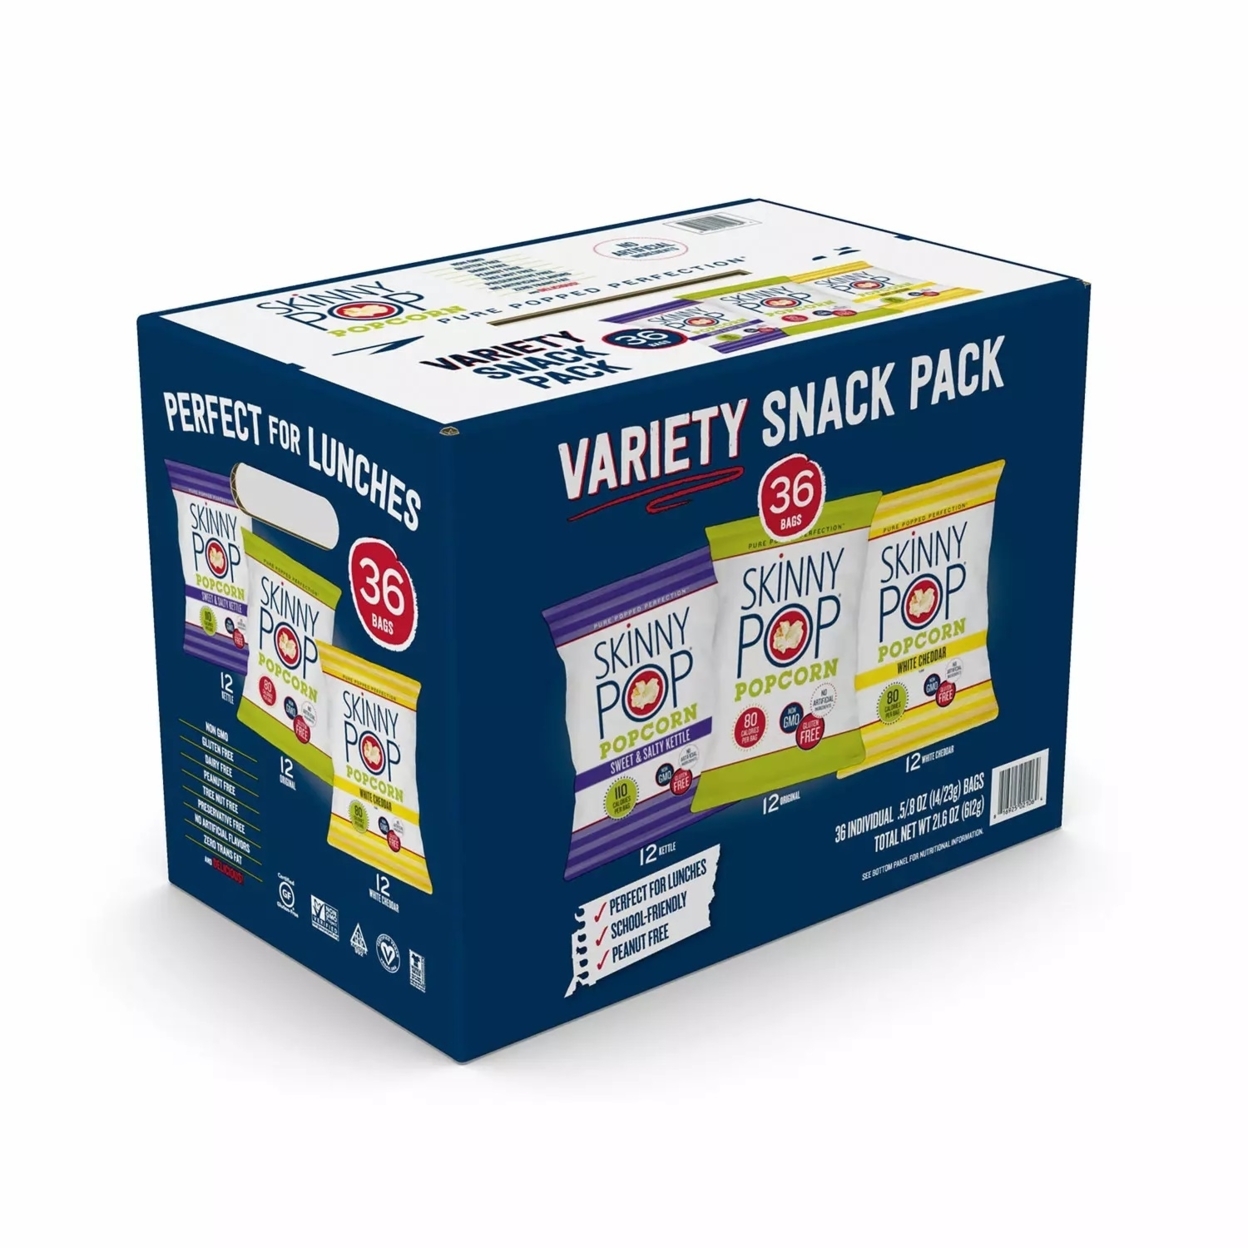 SkinnyPop Popcorn Variety Snack Pack (36 Count)